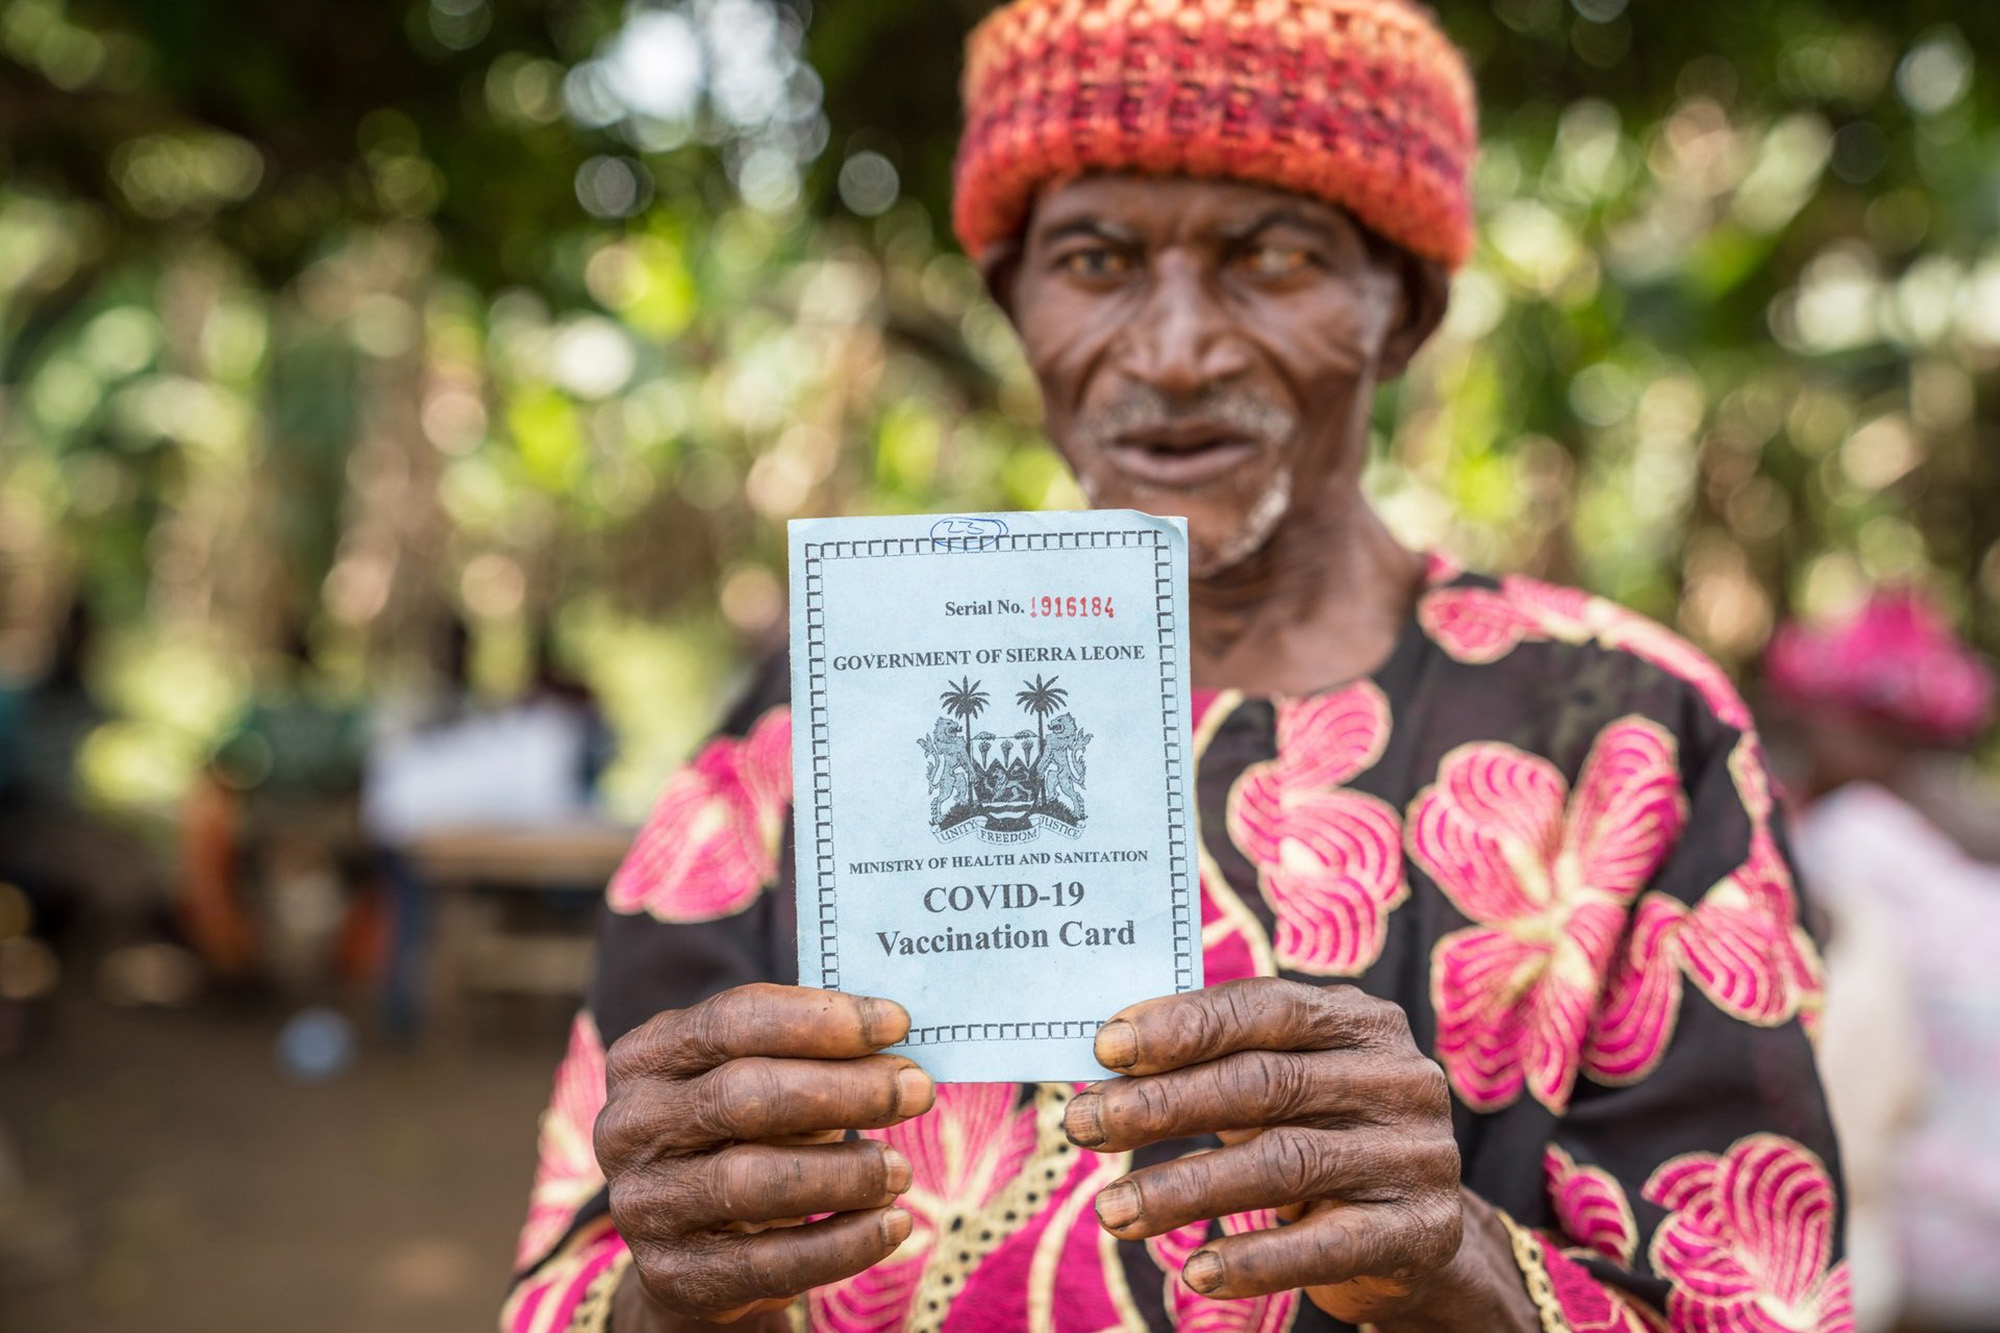 A man shows his Covid-19 vaccination card in Serra Leone.